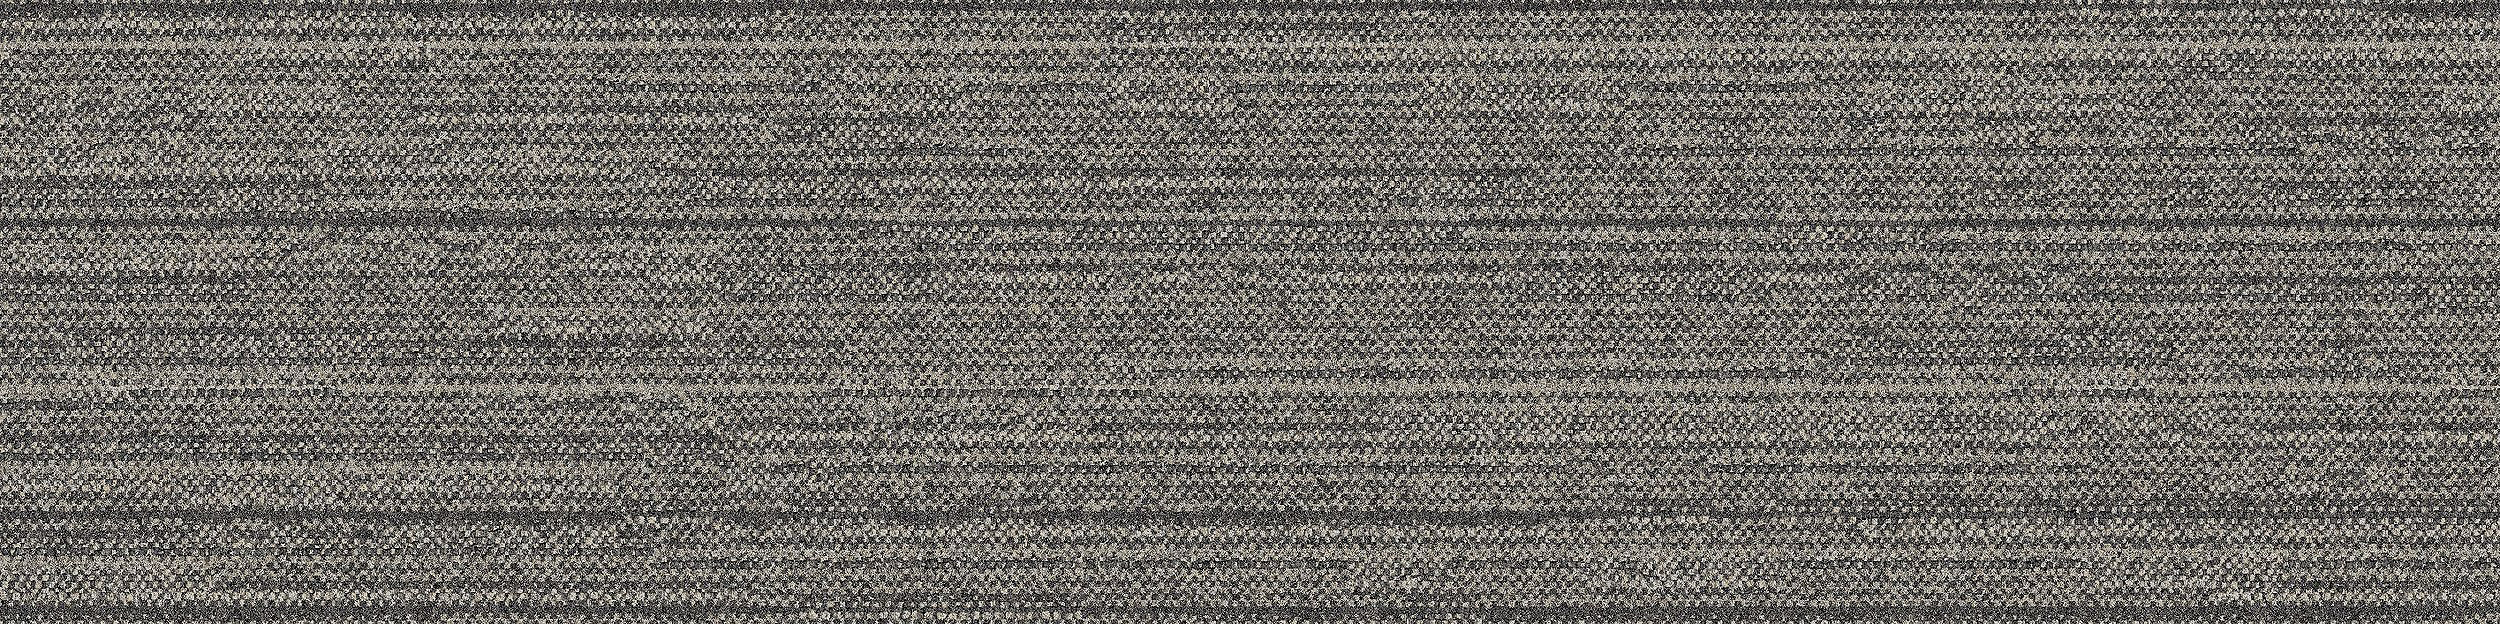 WW880 Carpet Tile In Natural Loom numéro d’image 8